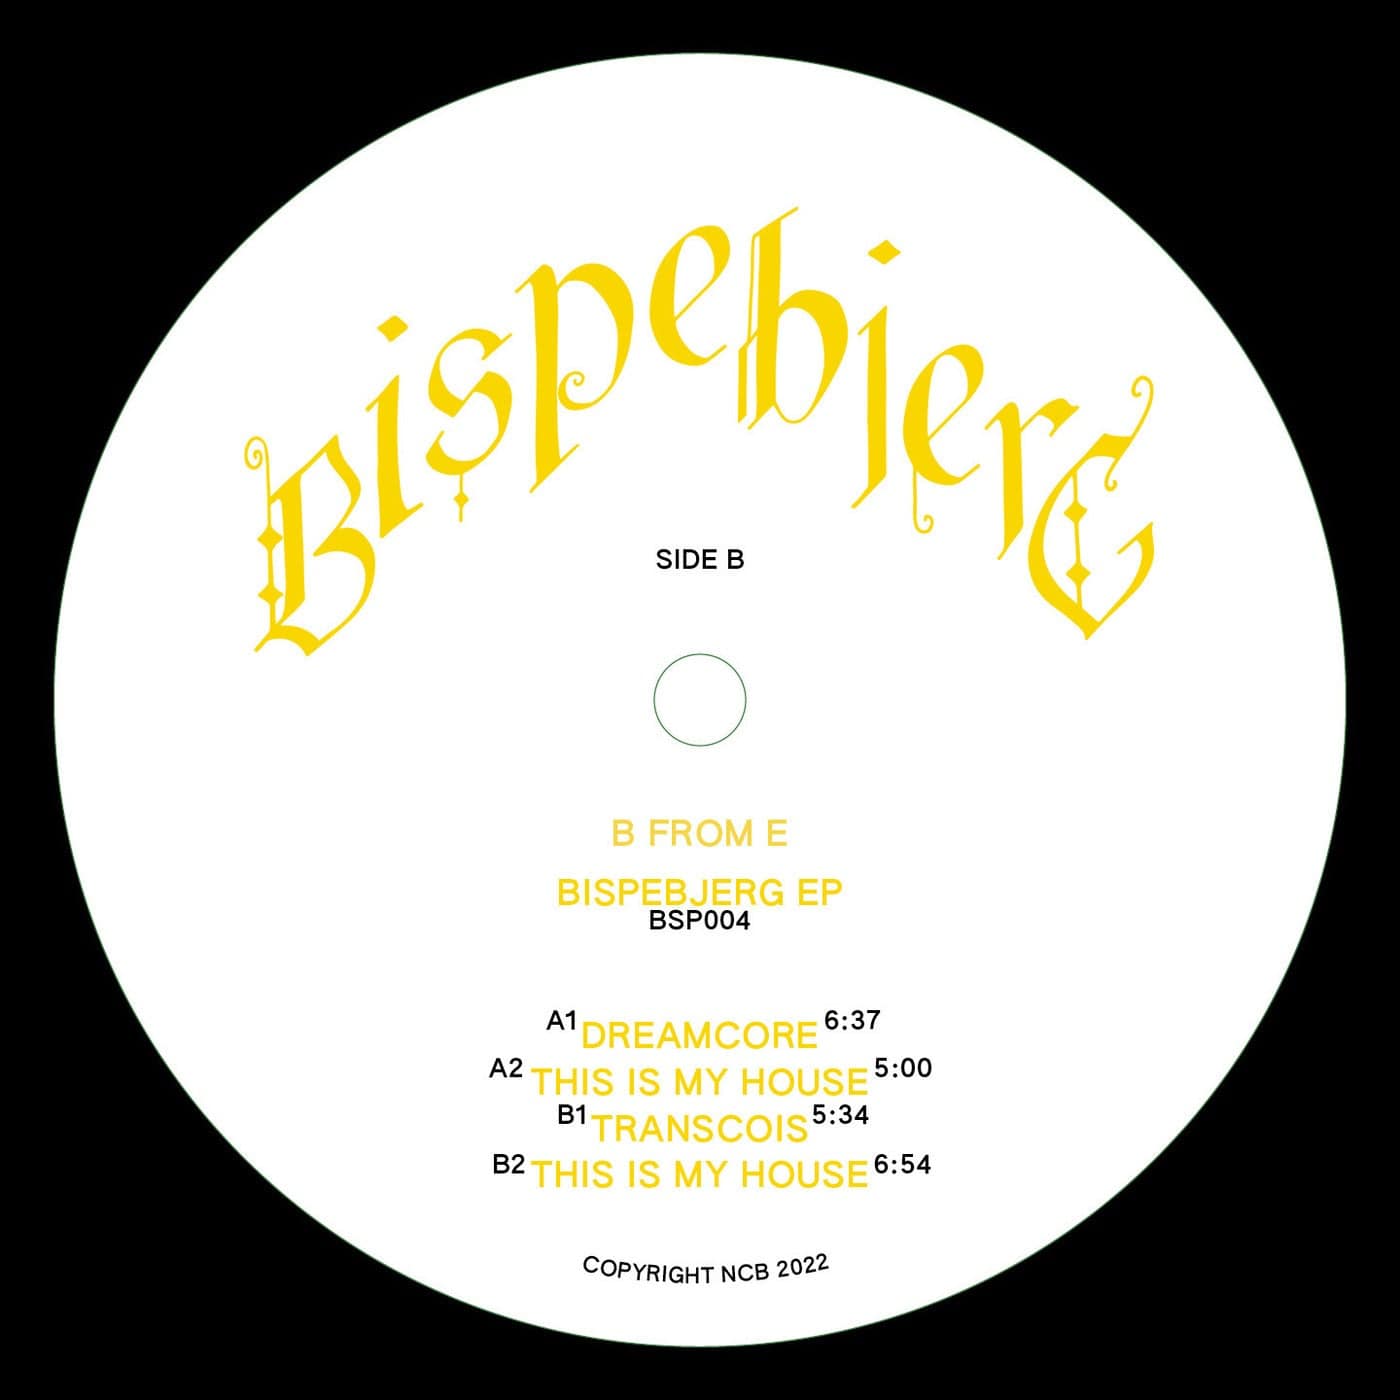 Download BISPEBJERG EP on Electrobuzz